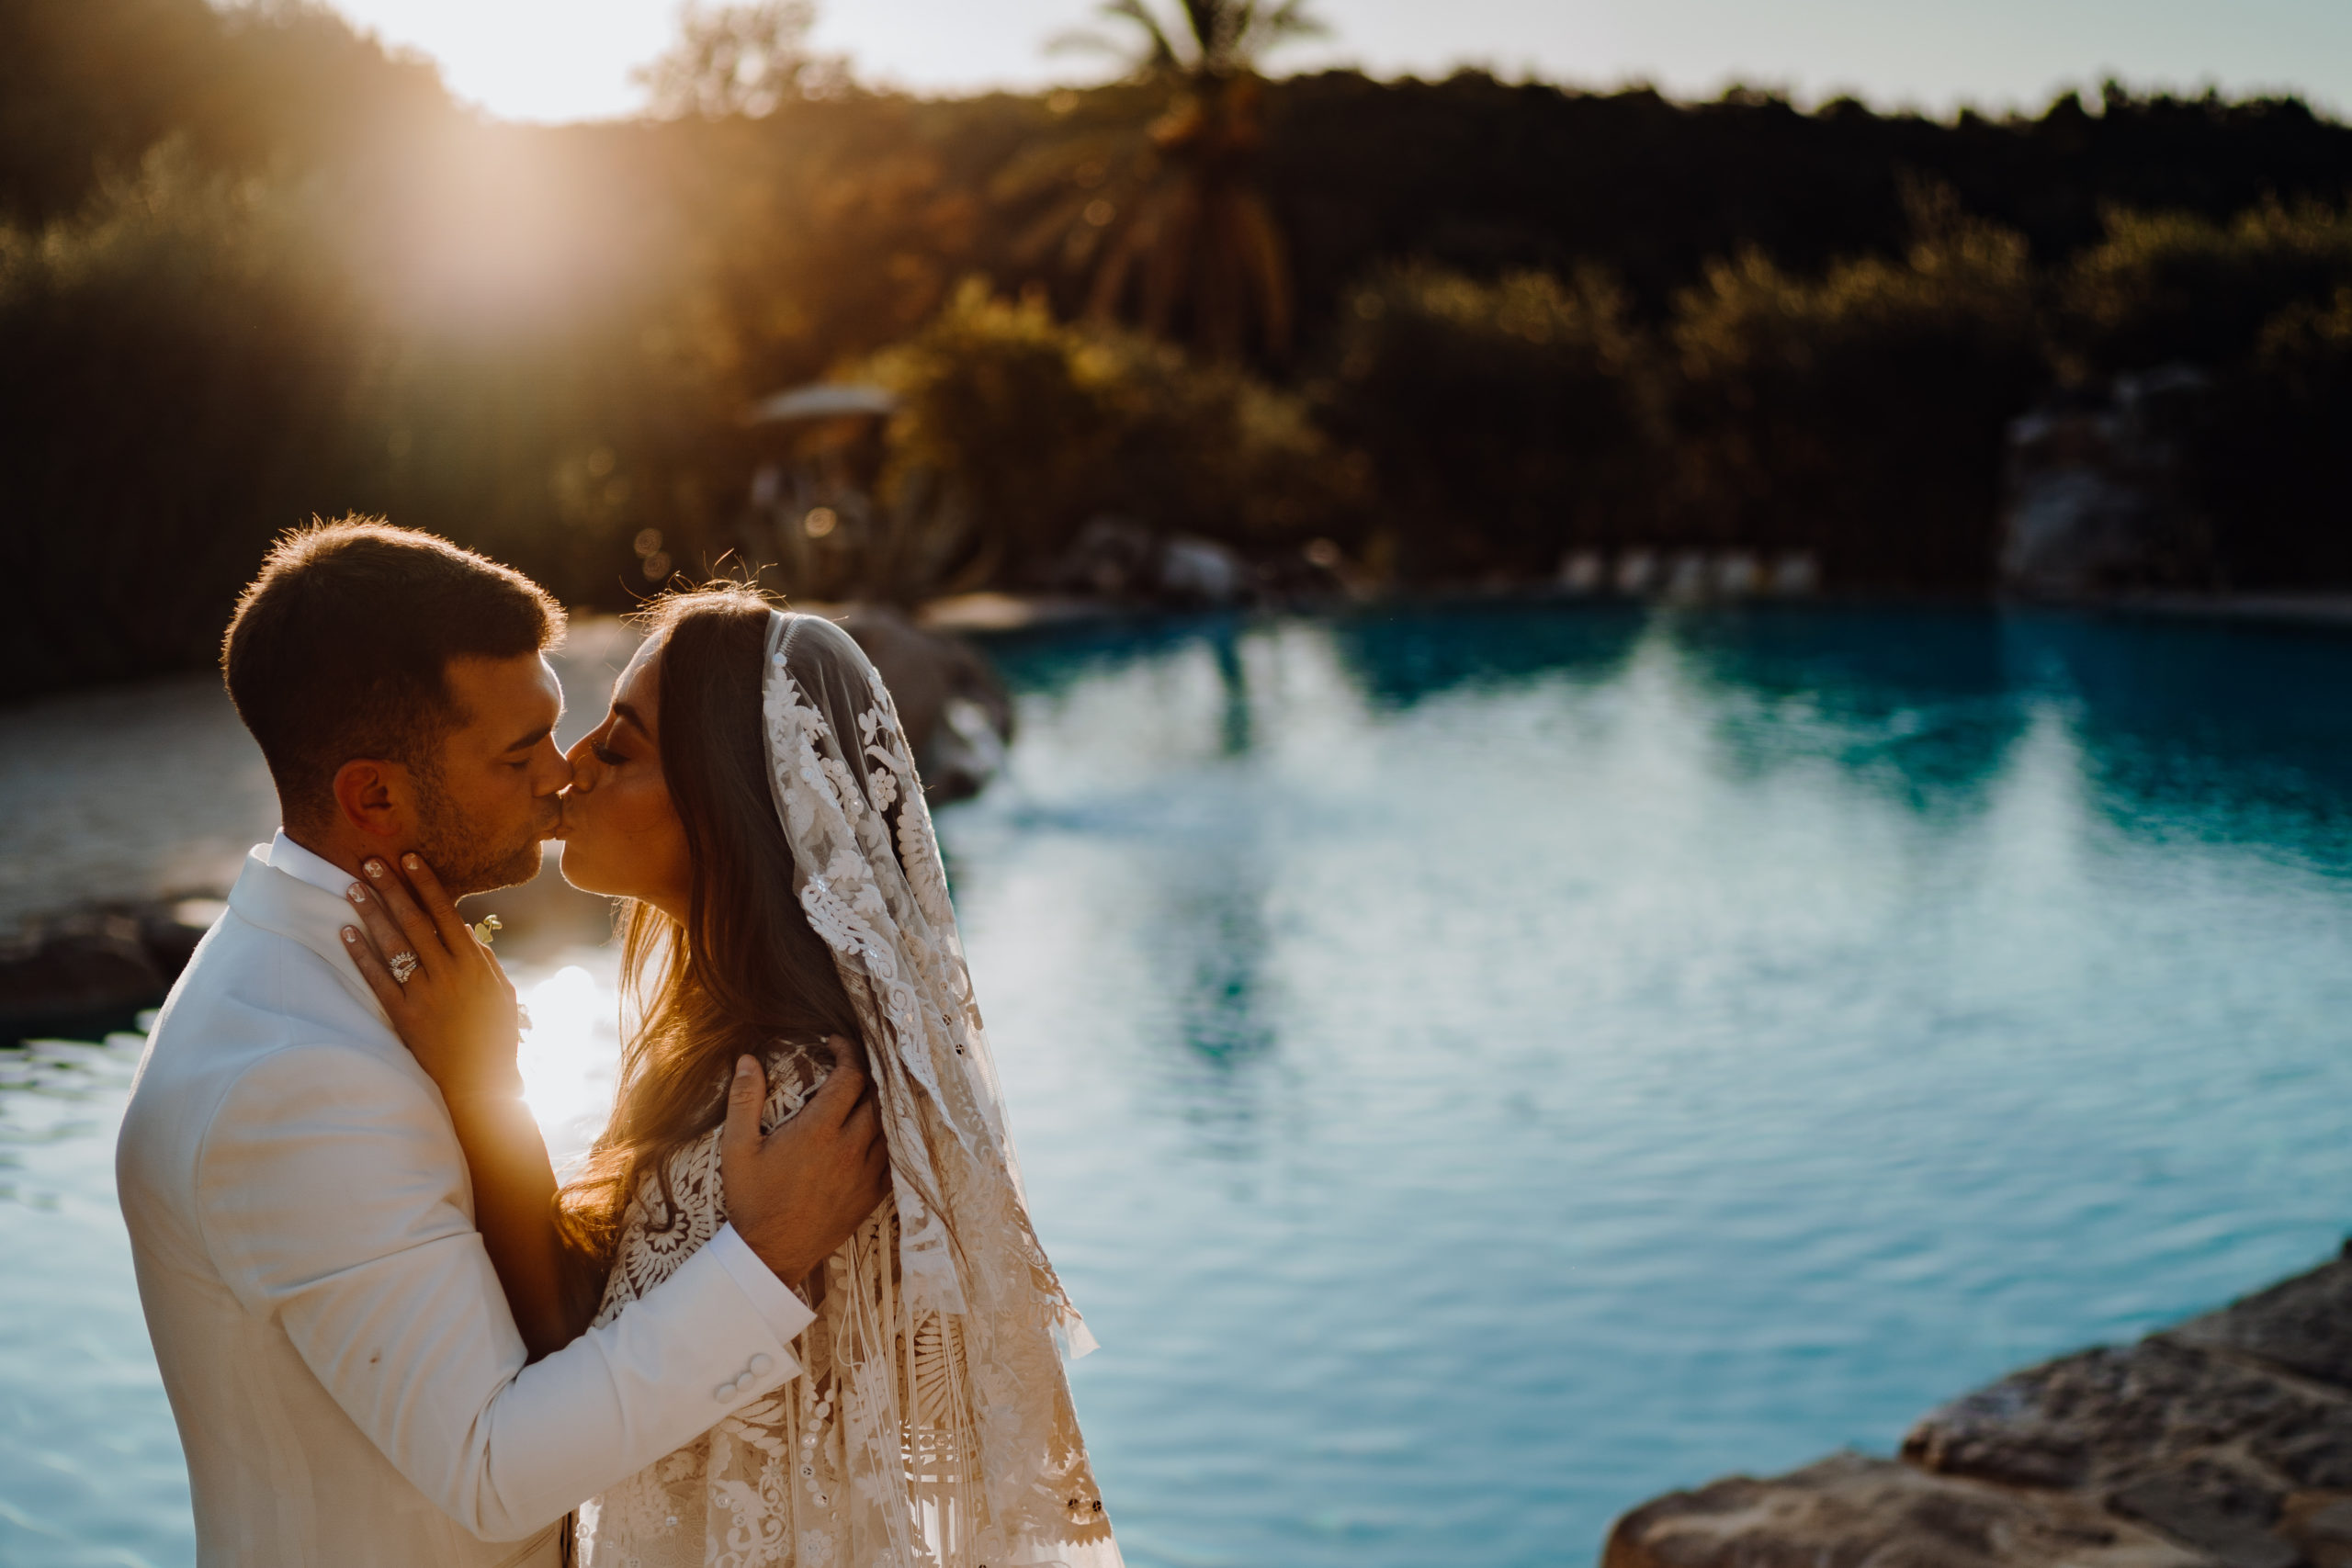 Wedding at Aquapetra resort – Campania, Italy